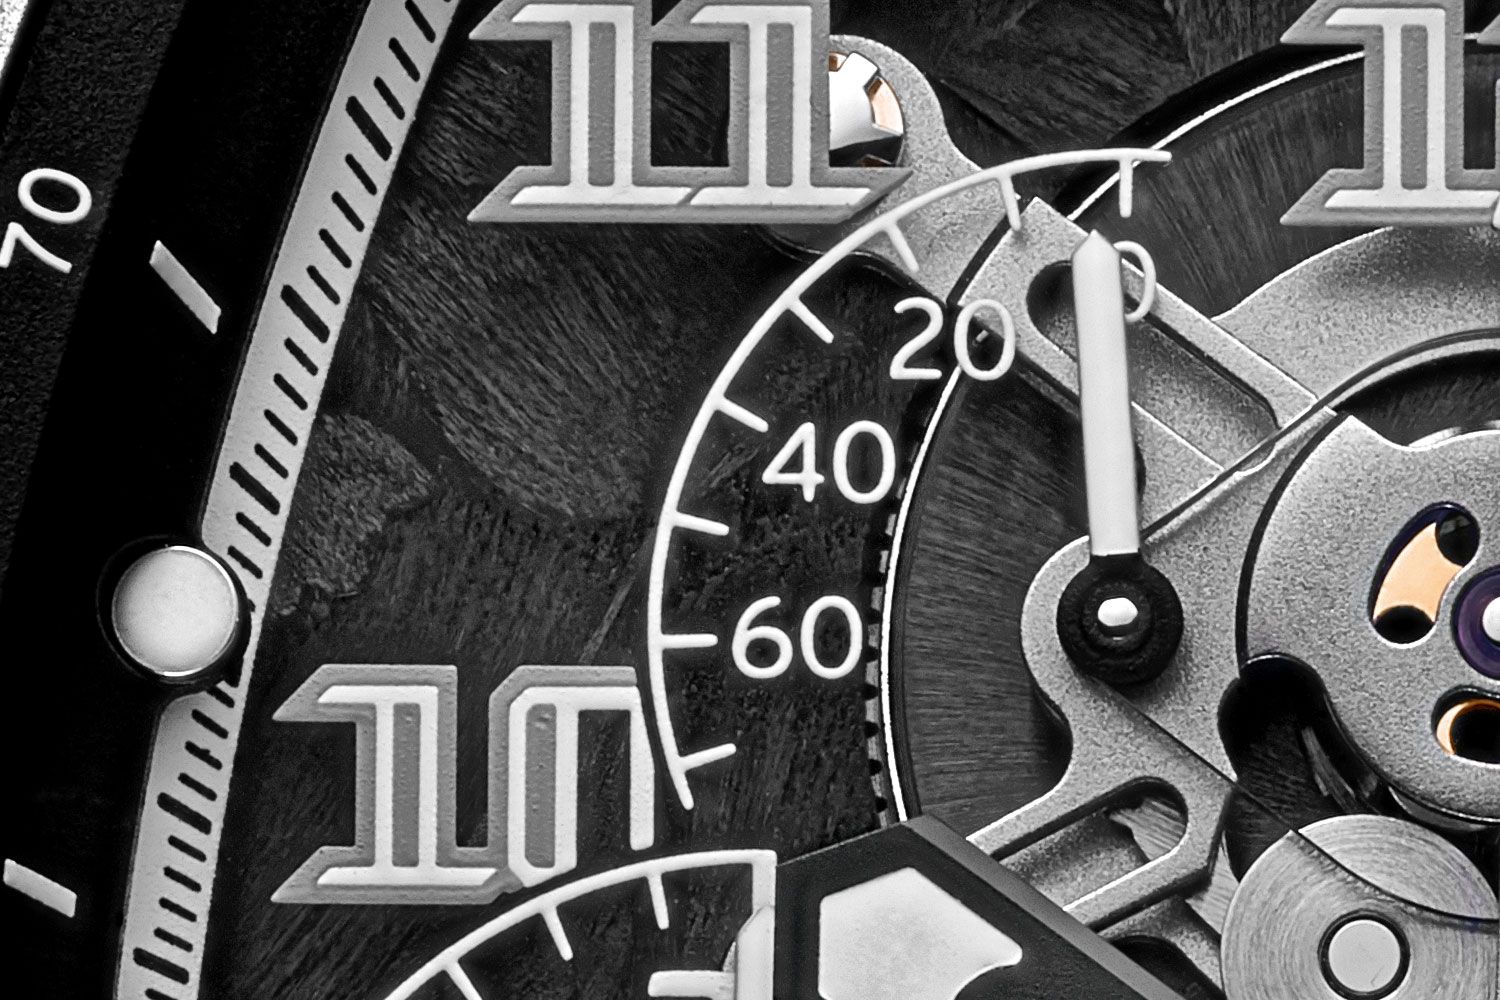 Richard Mille Black Carbon TPT Flyback Chronograph Watch (Ref # RM11-03)Richard Mille RM17-01 Manual Winding Tourbillion (New)